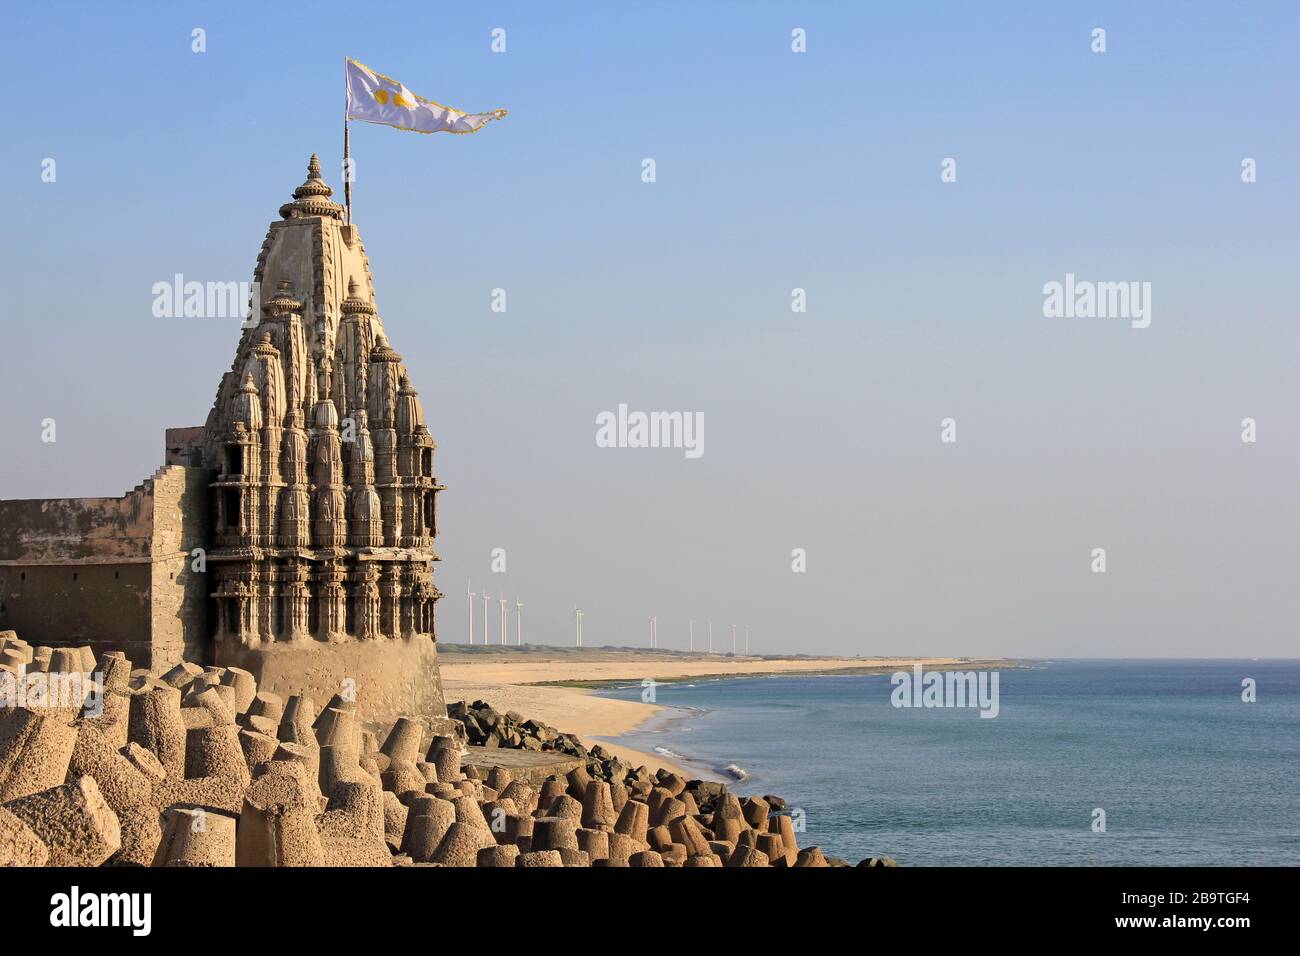 Samudra Narayan Hindu Temple at the confluence of the river Gomti and the Arabian Sea in Dwarka, Gujarat, India Stock Photo